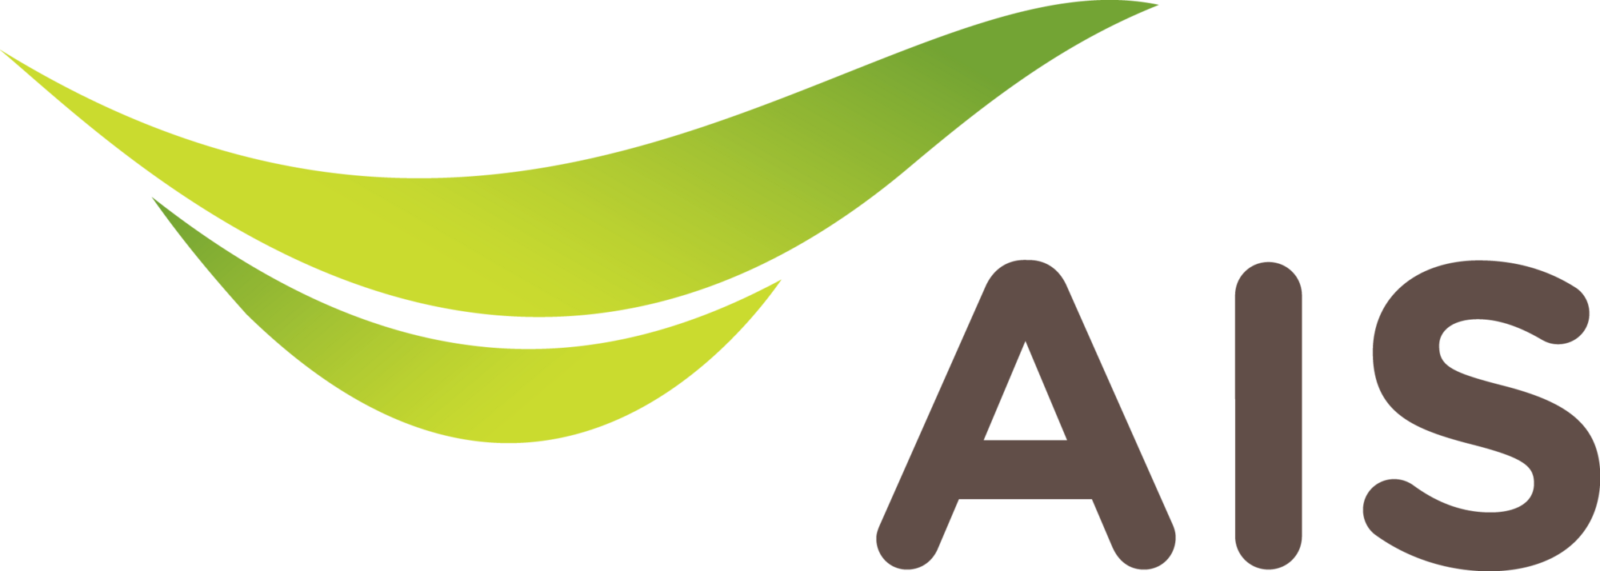 Ais Logo